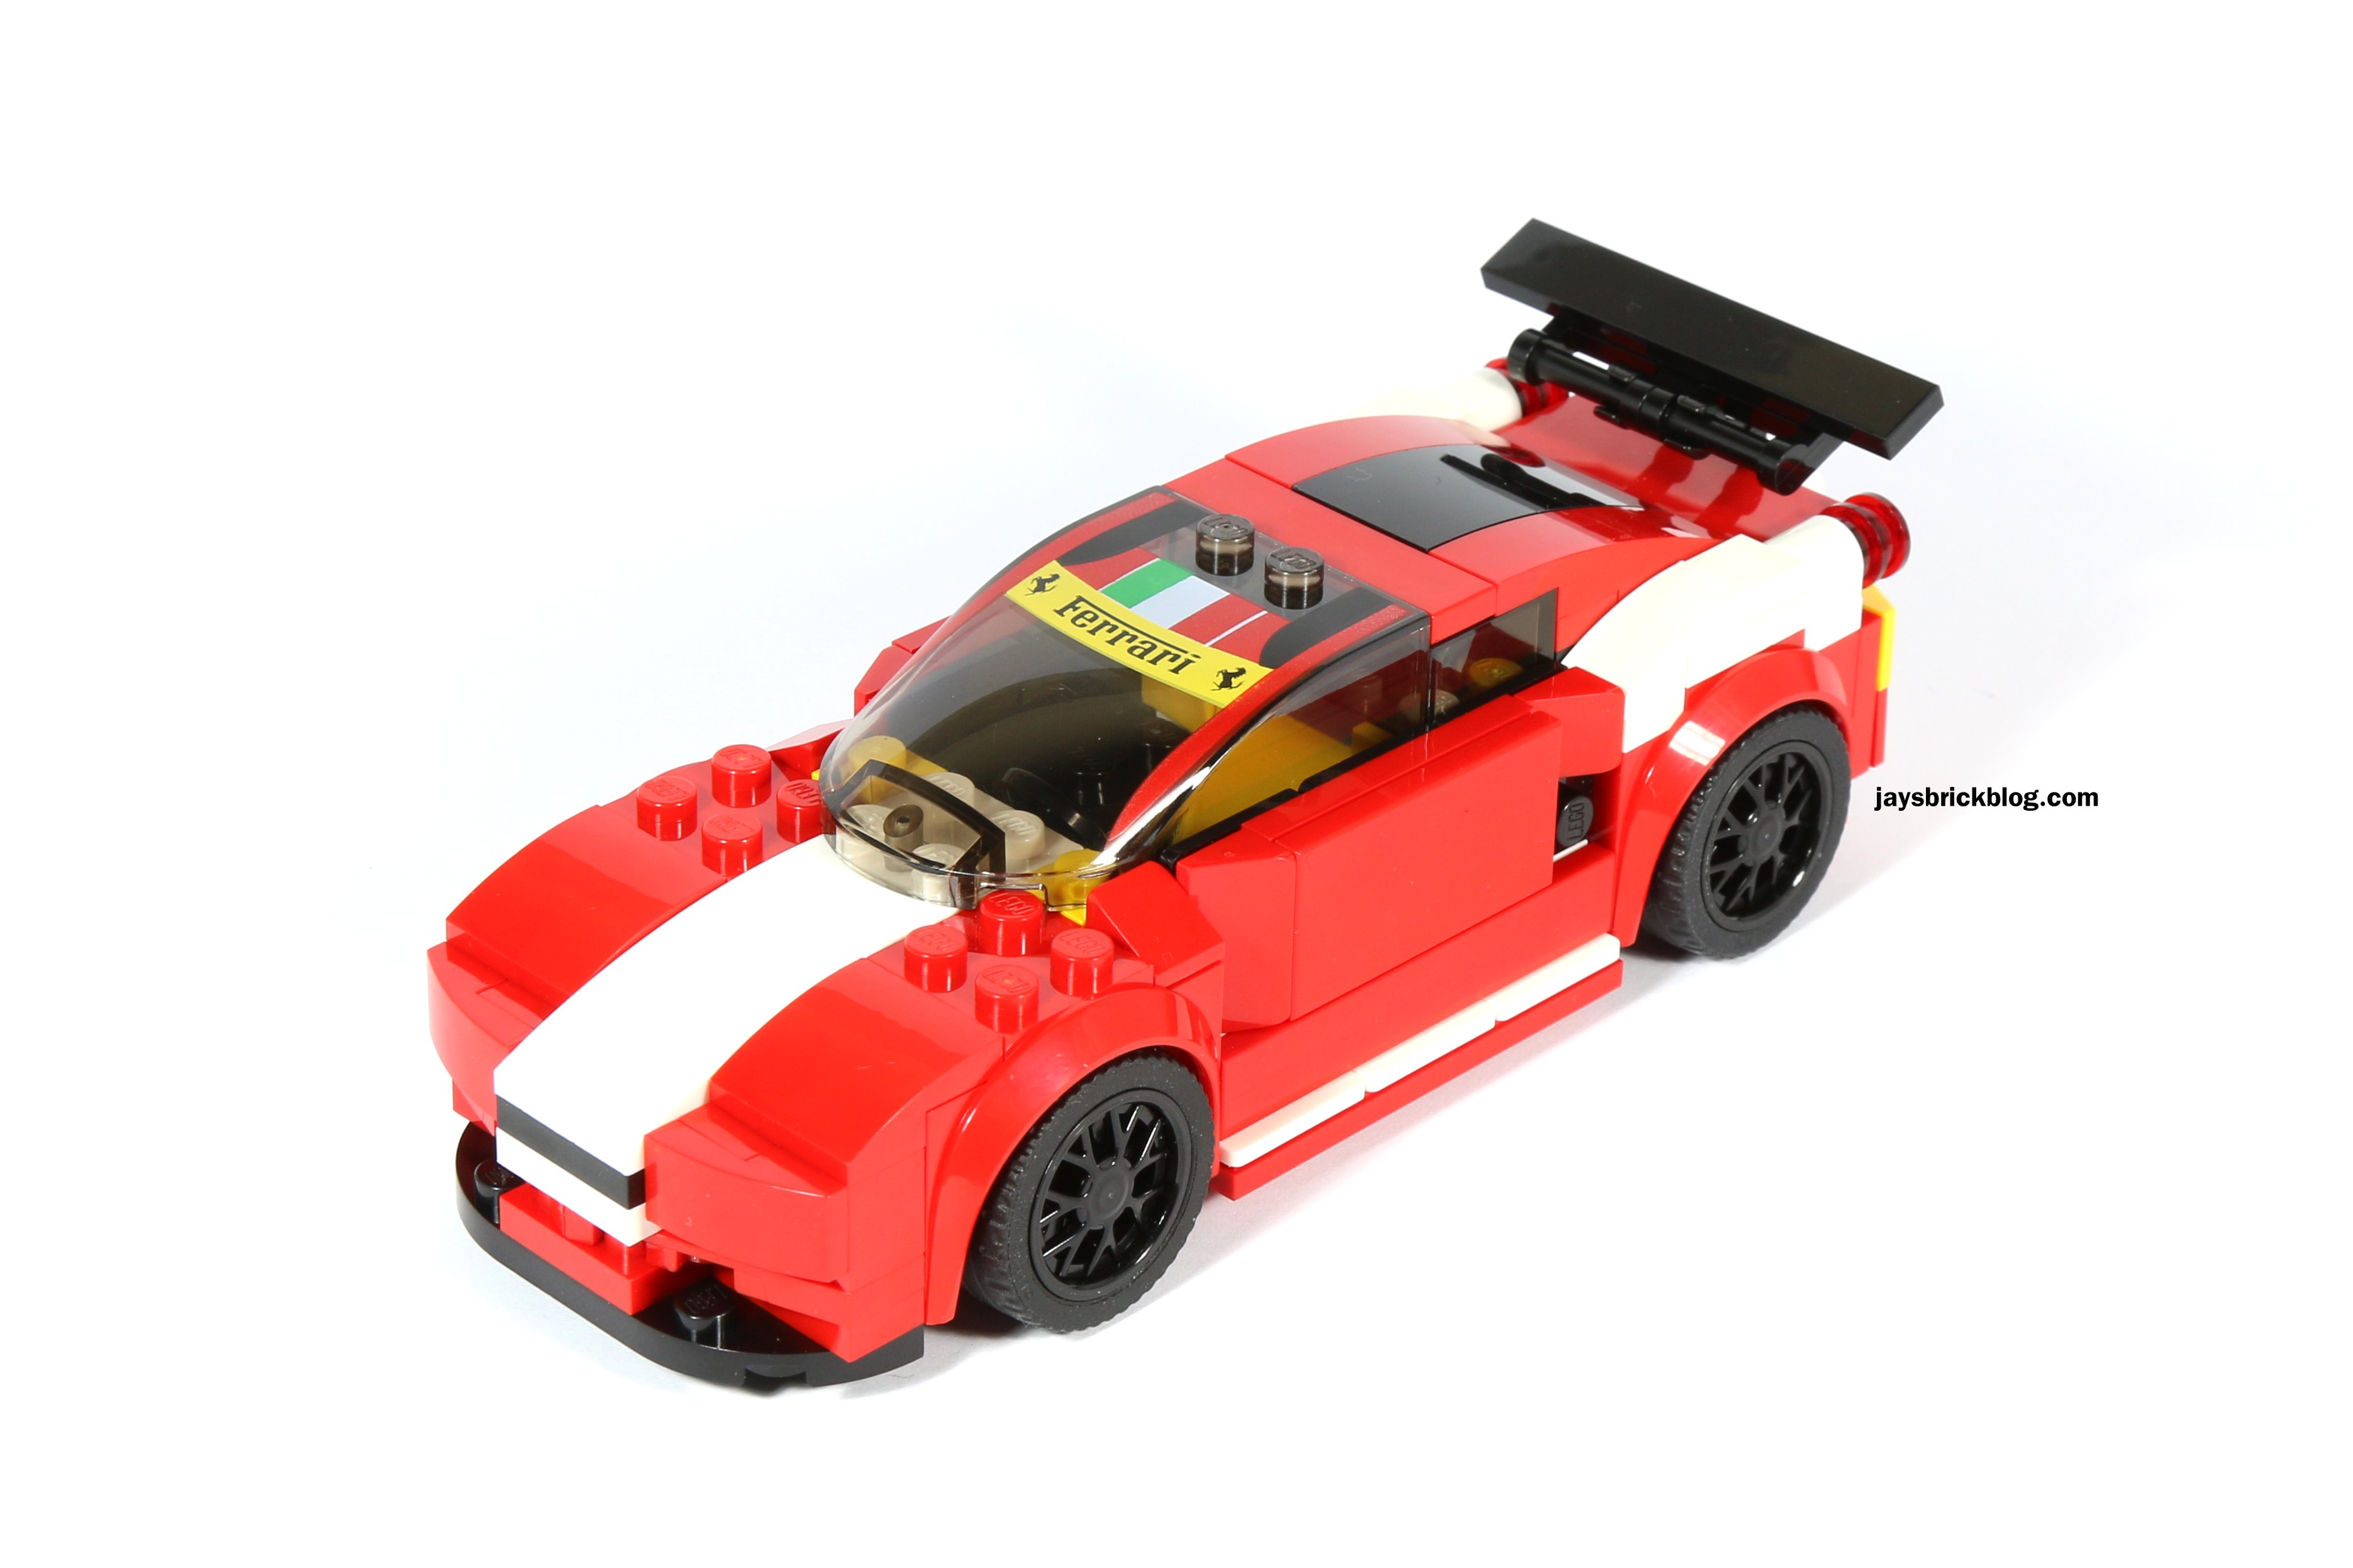 Review: LEGO 75908 - Ferrari 458 Italia GT2 Jay's Blog